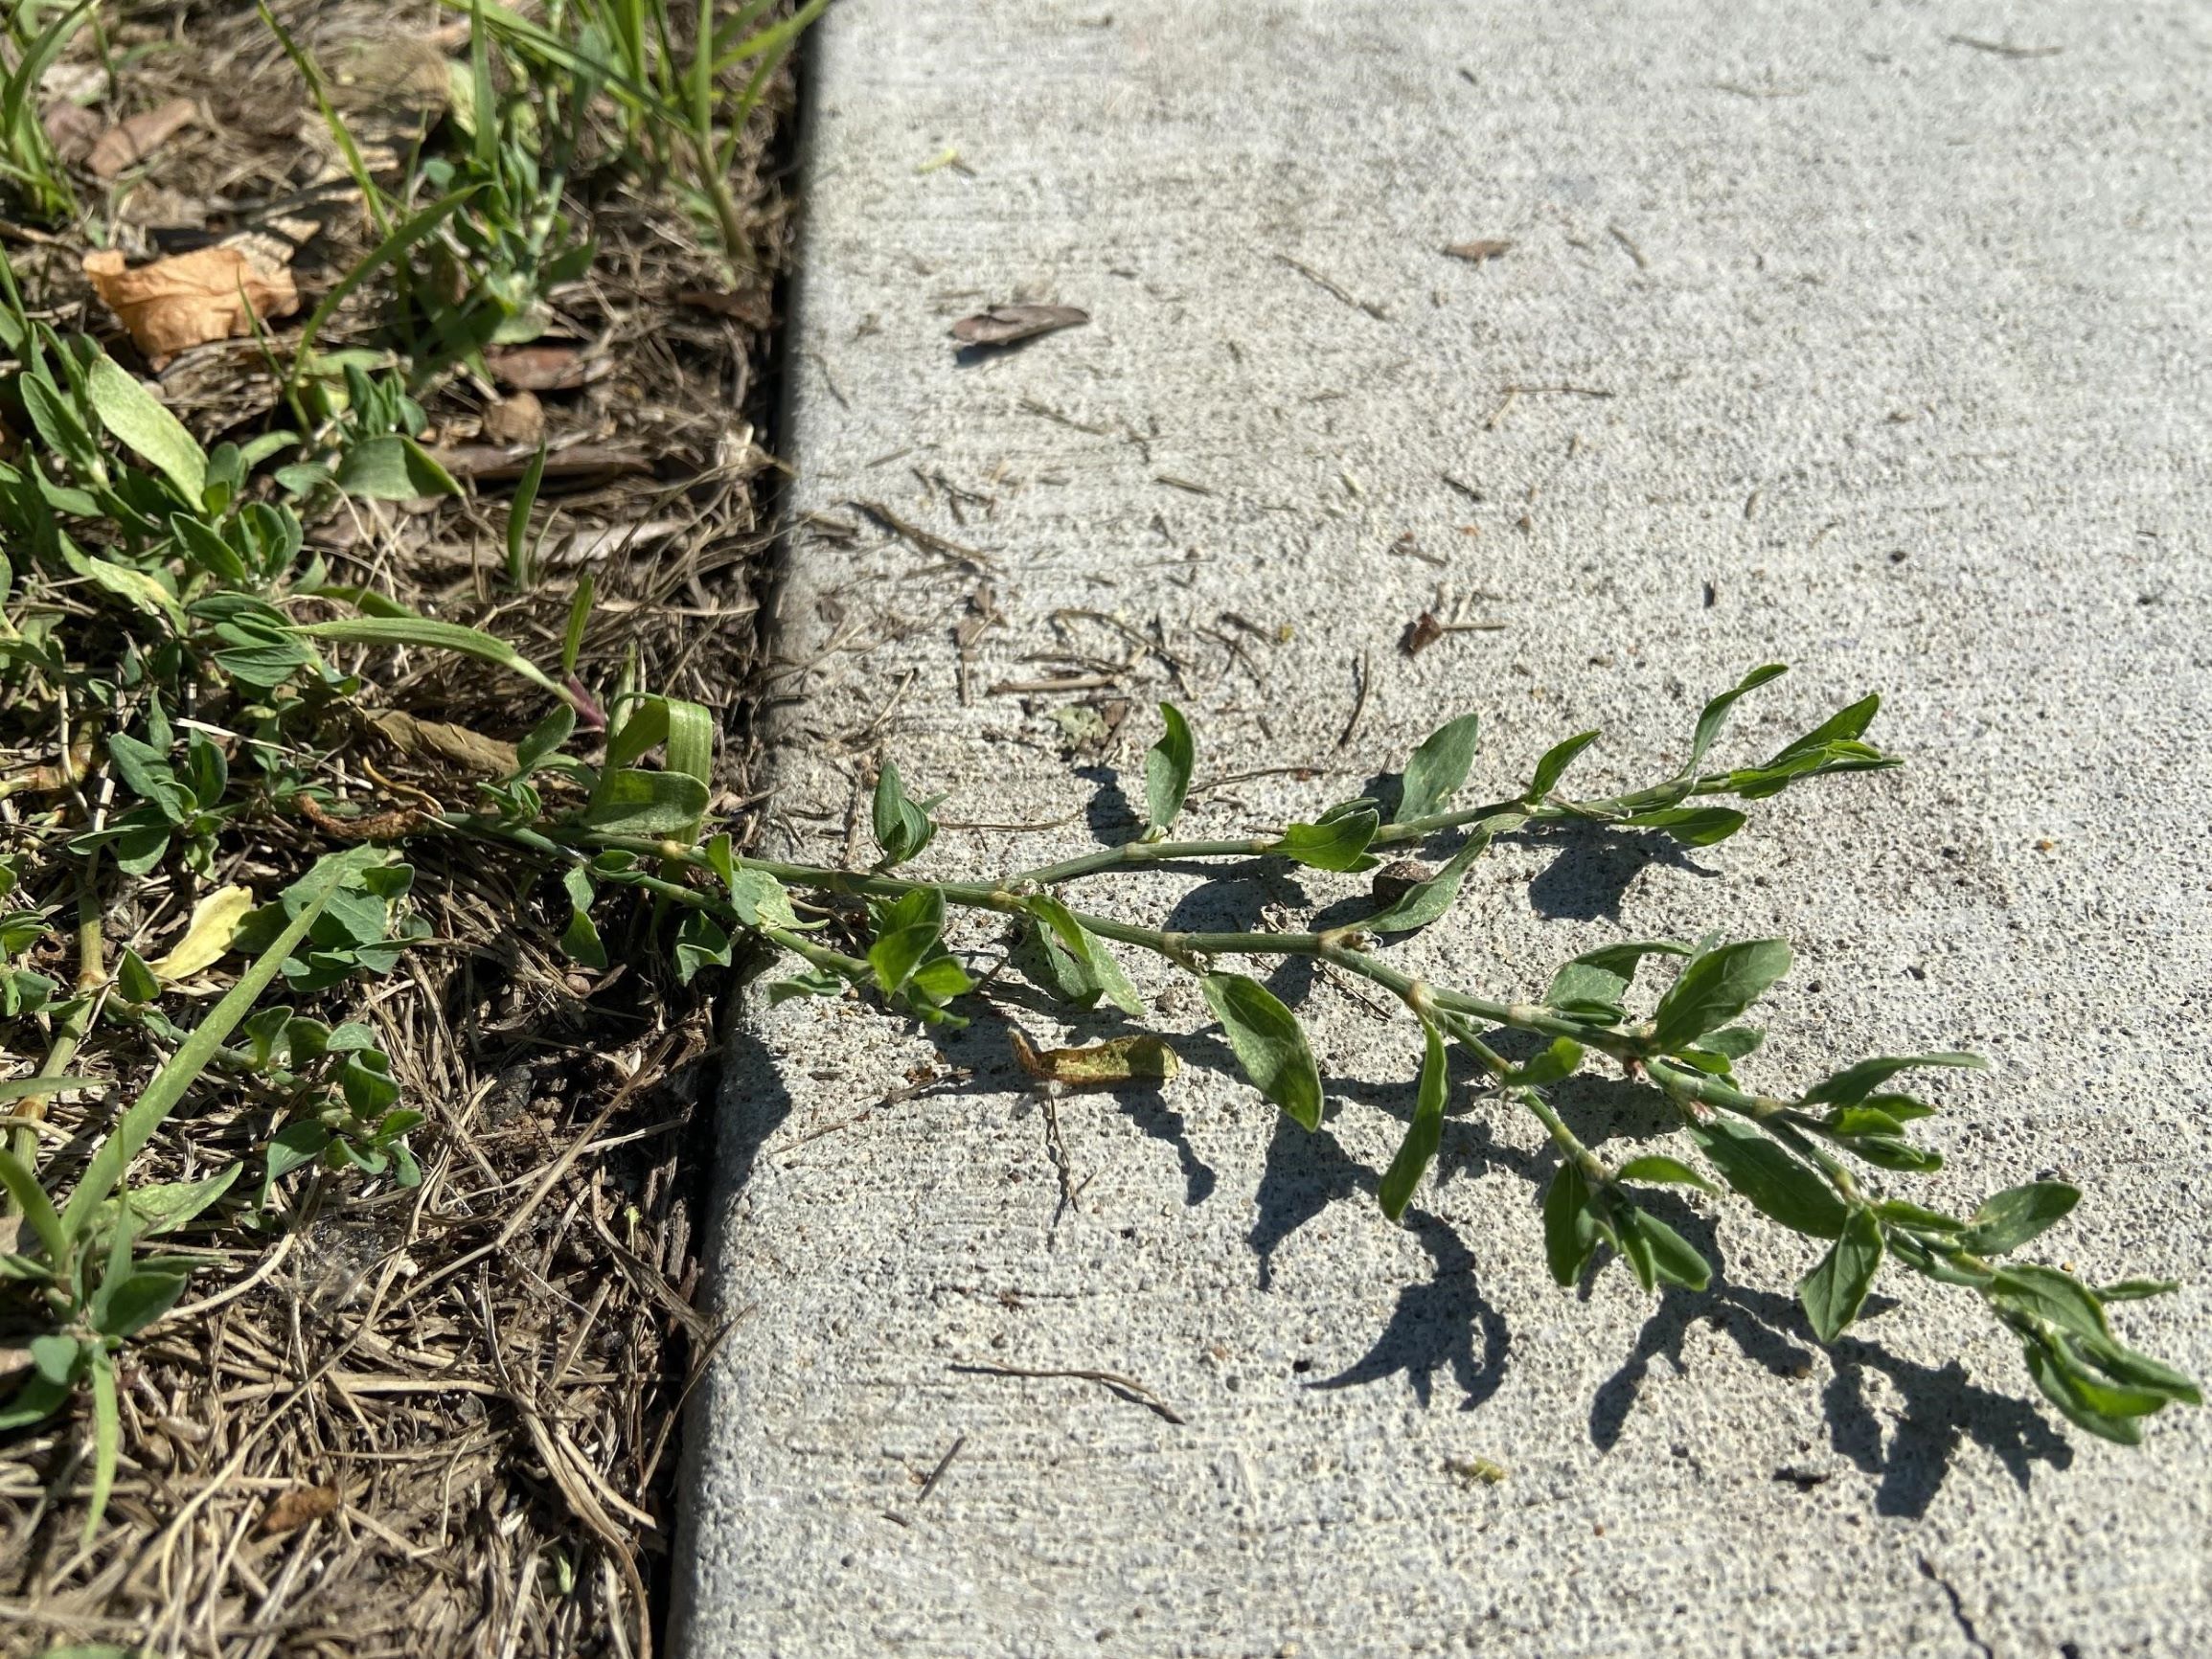 a knotweed plant growing on top of a sidewalk